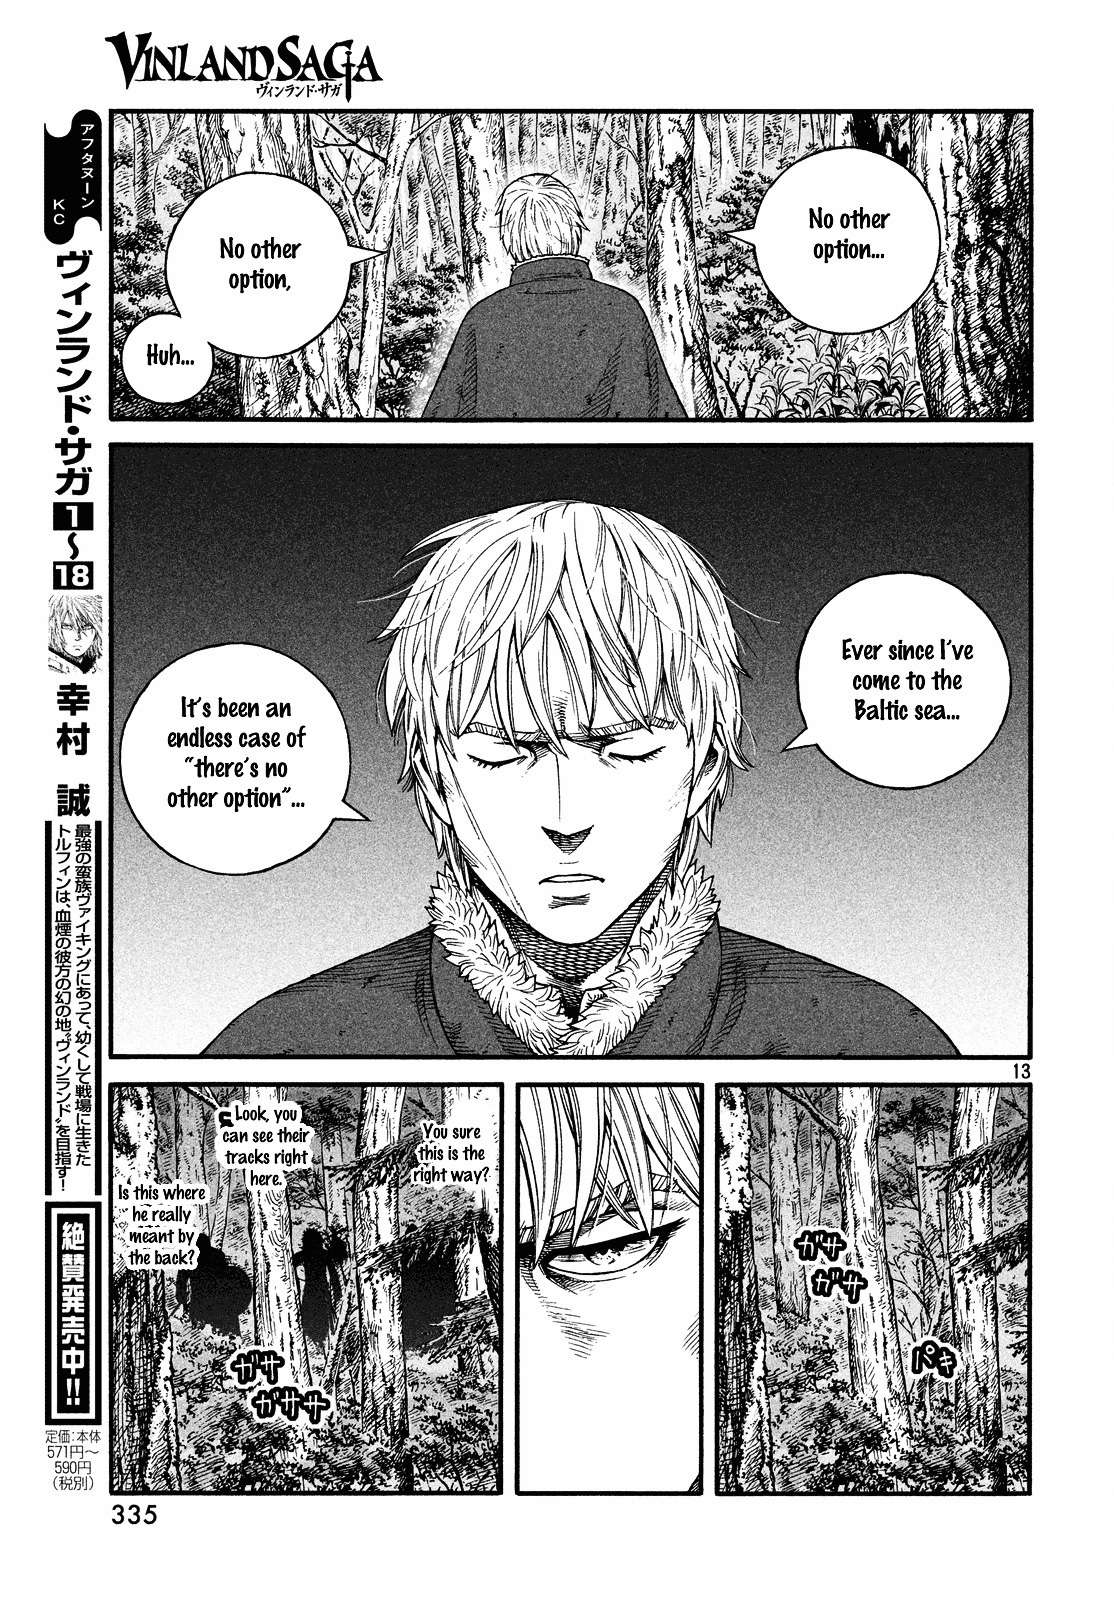 Vinland Saga Manga Manga Chapter - 134 - image 14